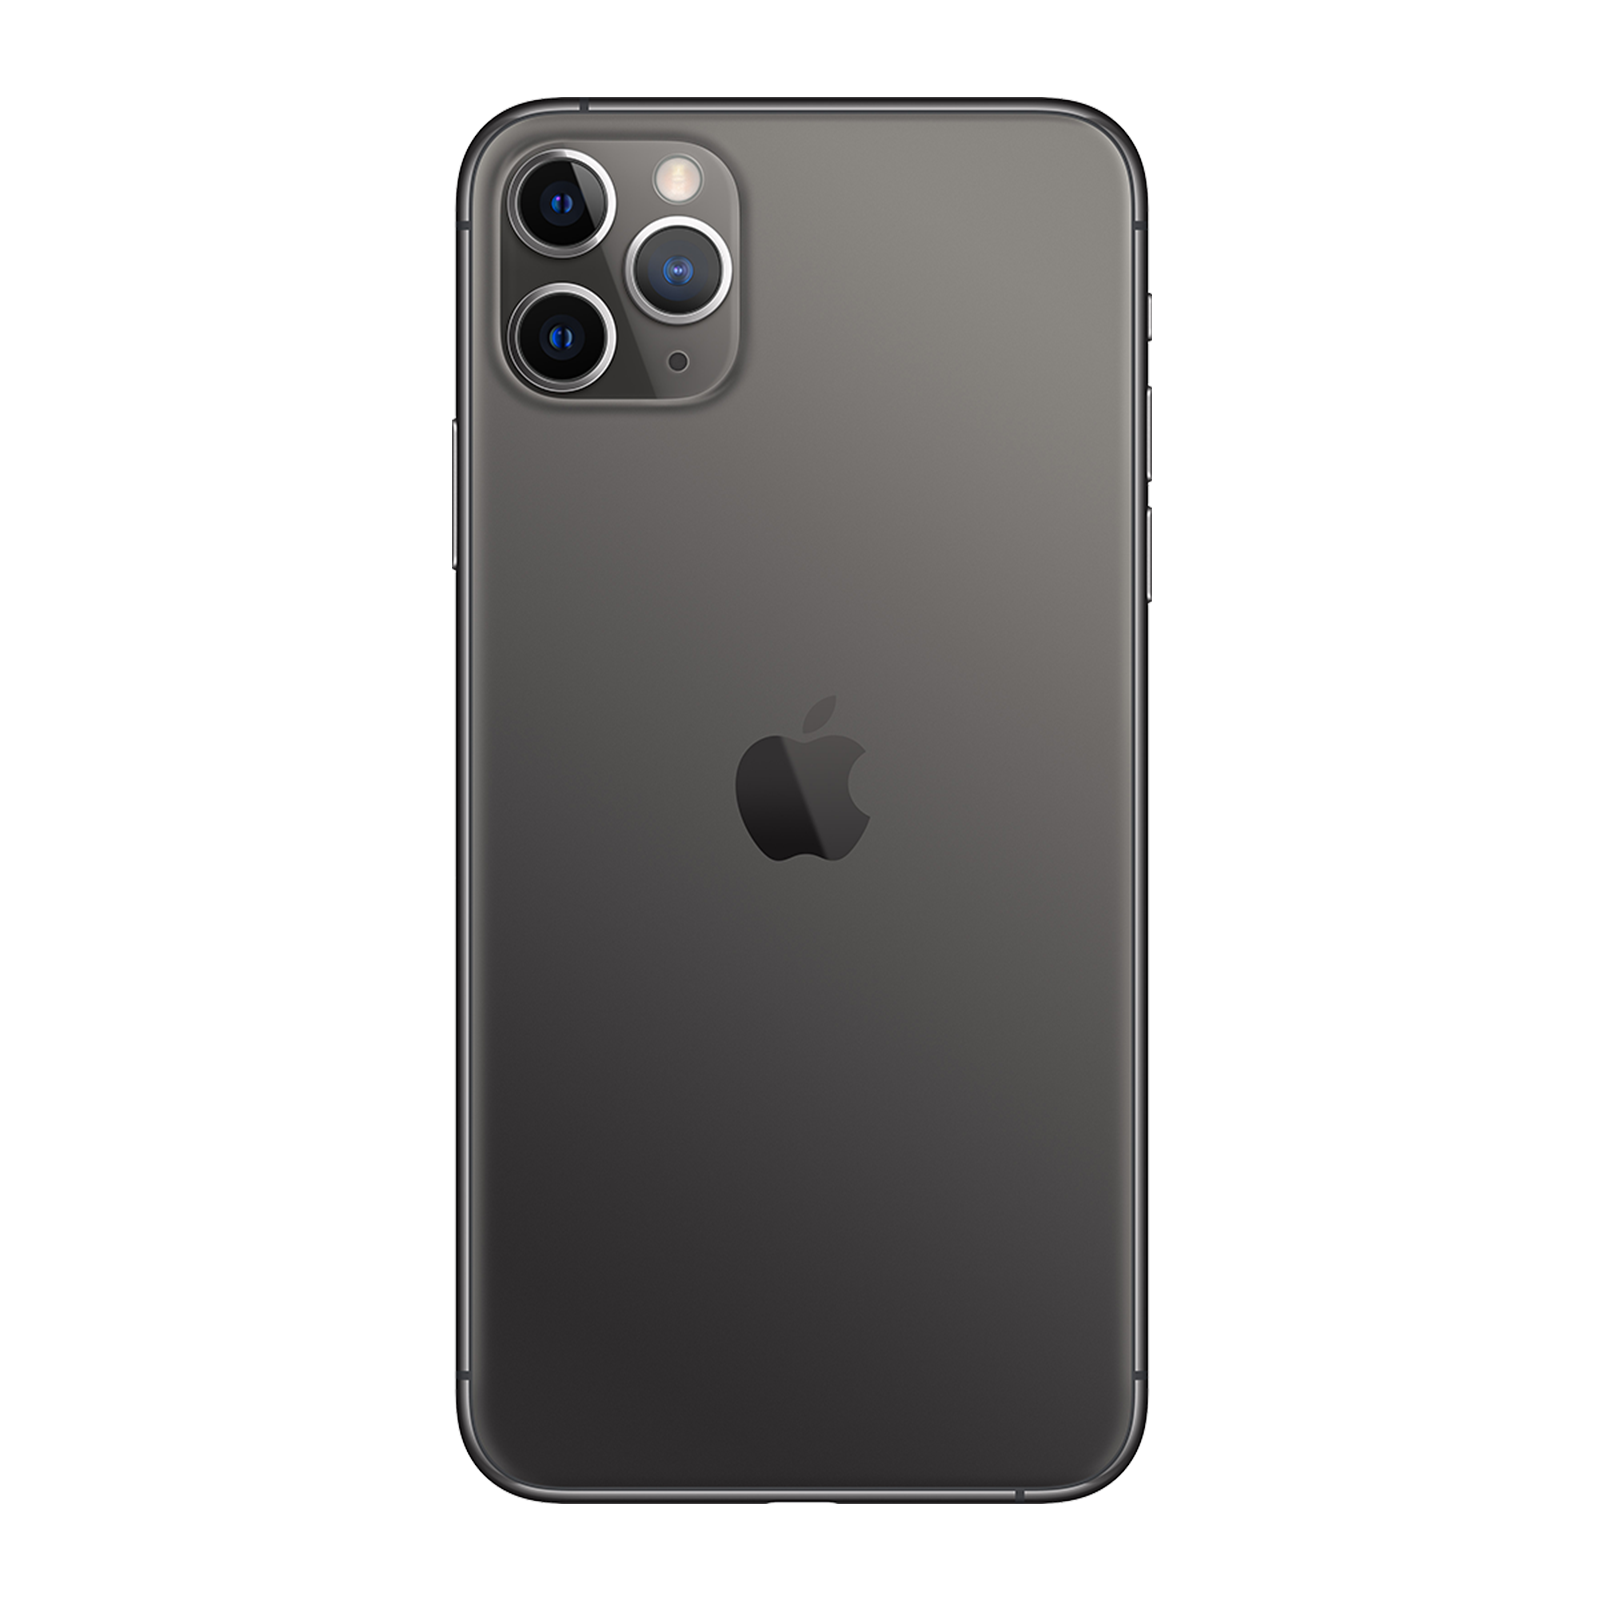 iPhone 11 Pro 64GB Space Grey Very Good -  - Unlocked